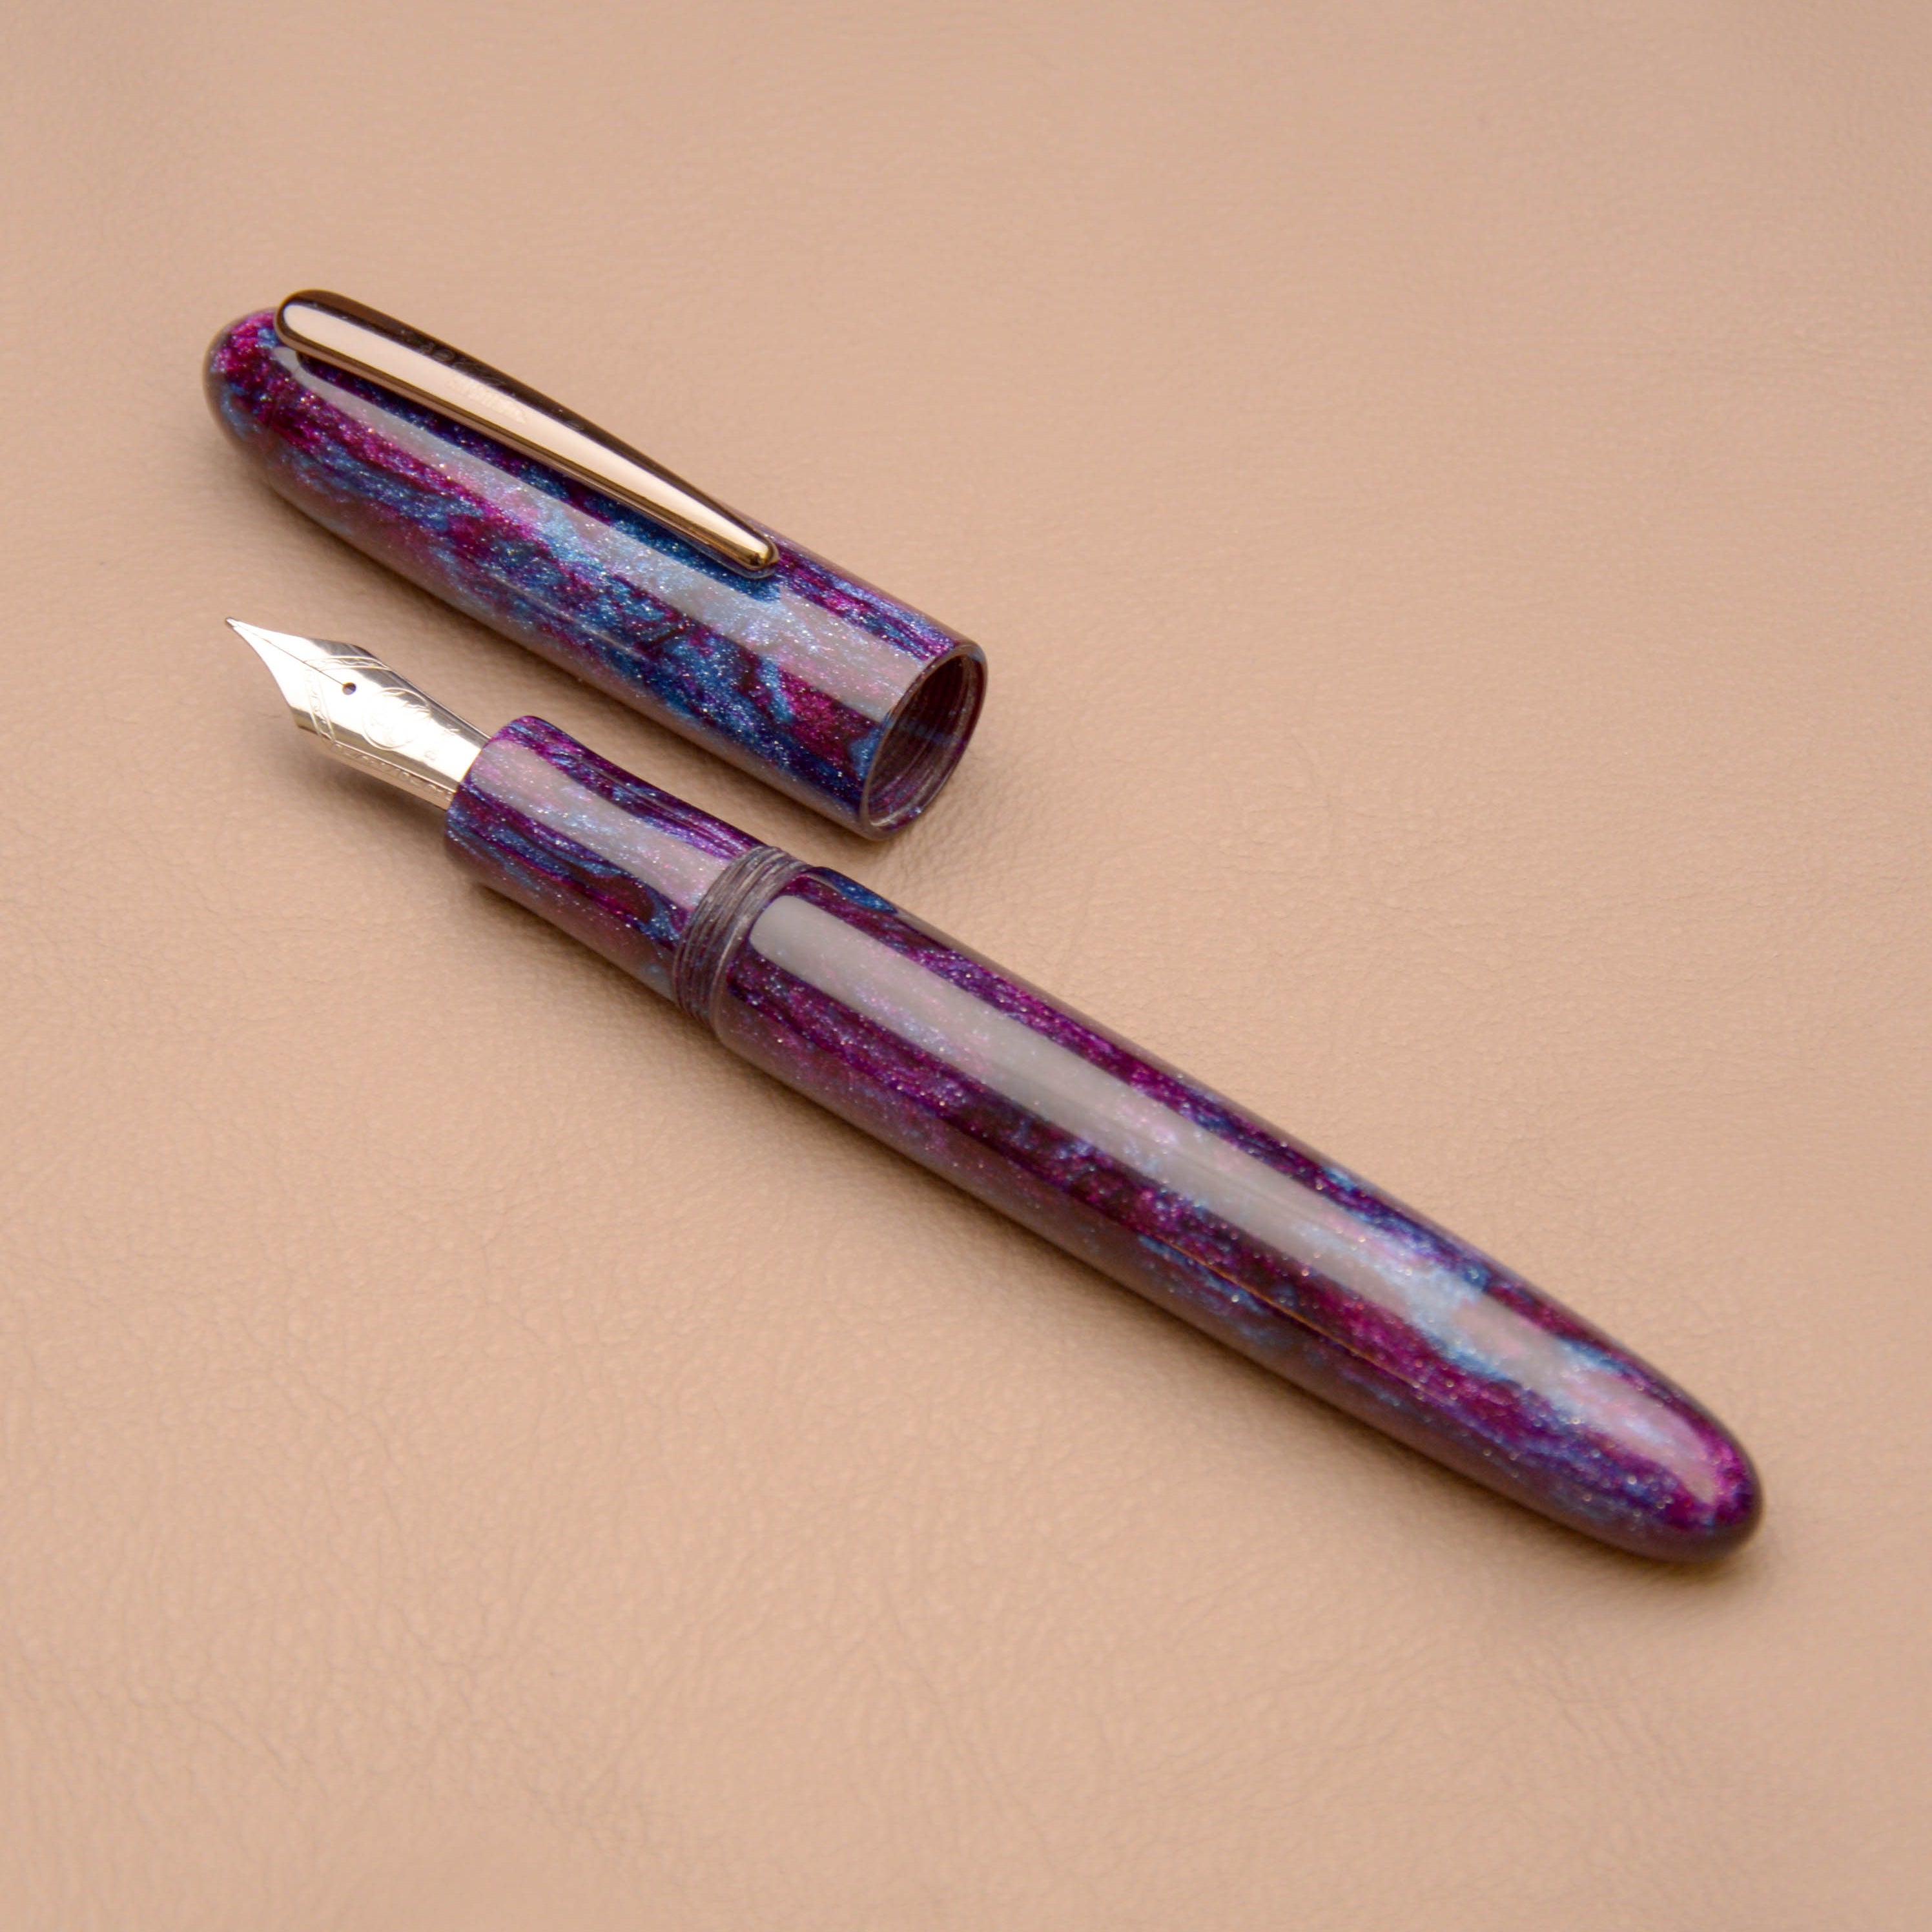 Fountain Pen - Bock #6 - 14 mm - DiamondCast Orion with Clip